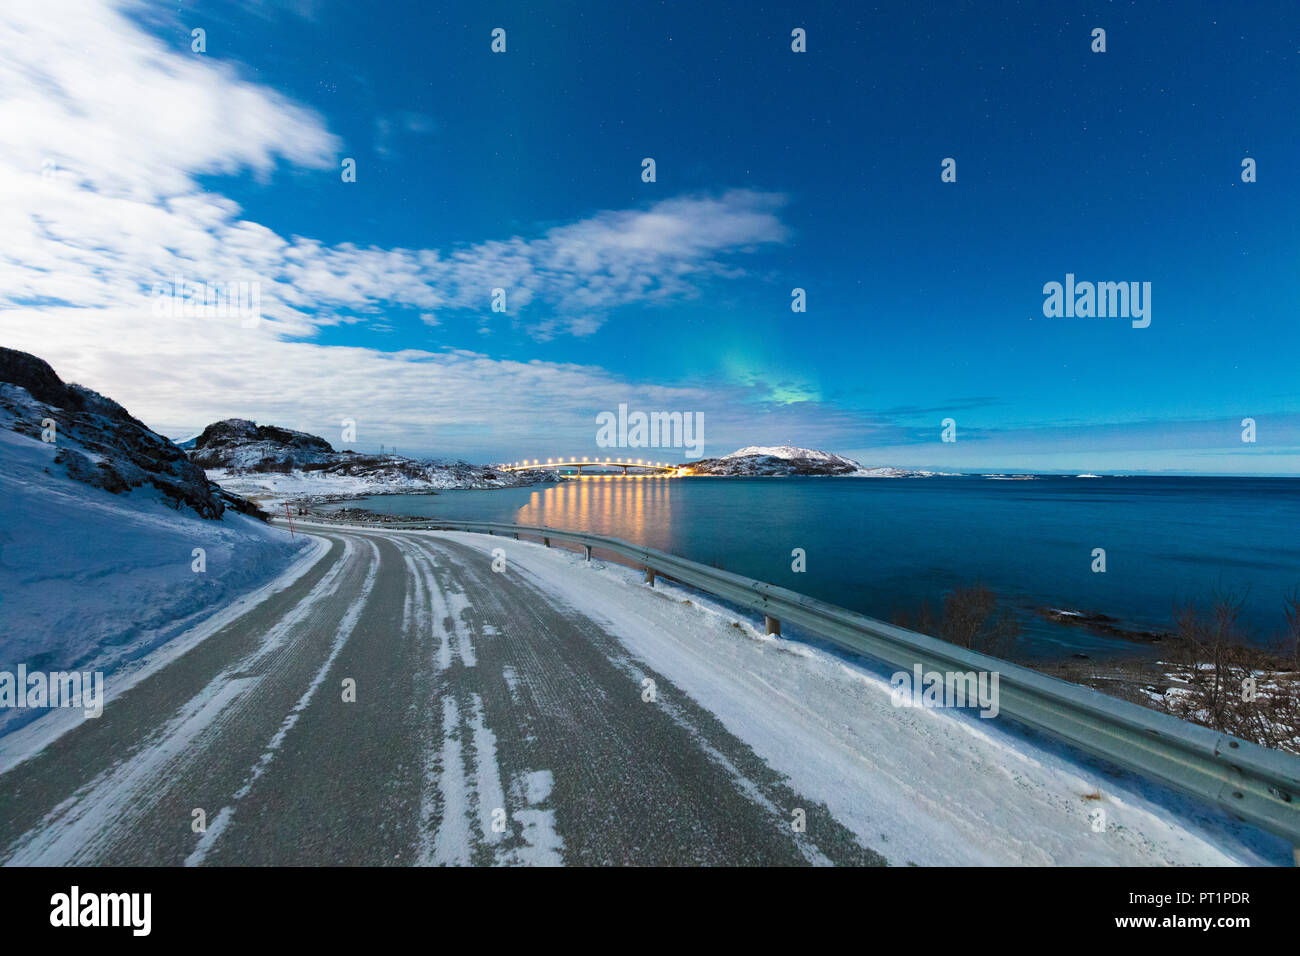 Ice on asphalt road, Sommaroy island, Troms county, Norway Stock Photo